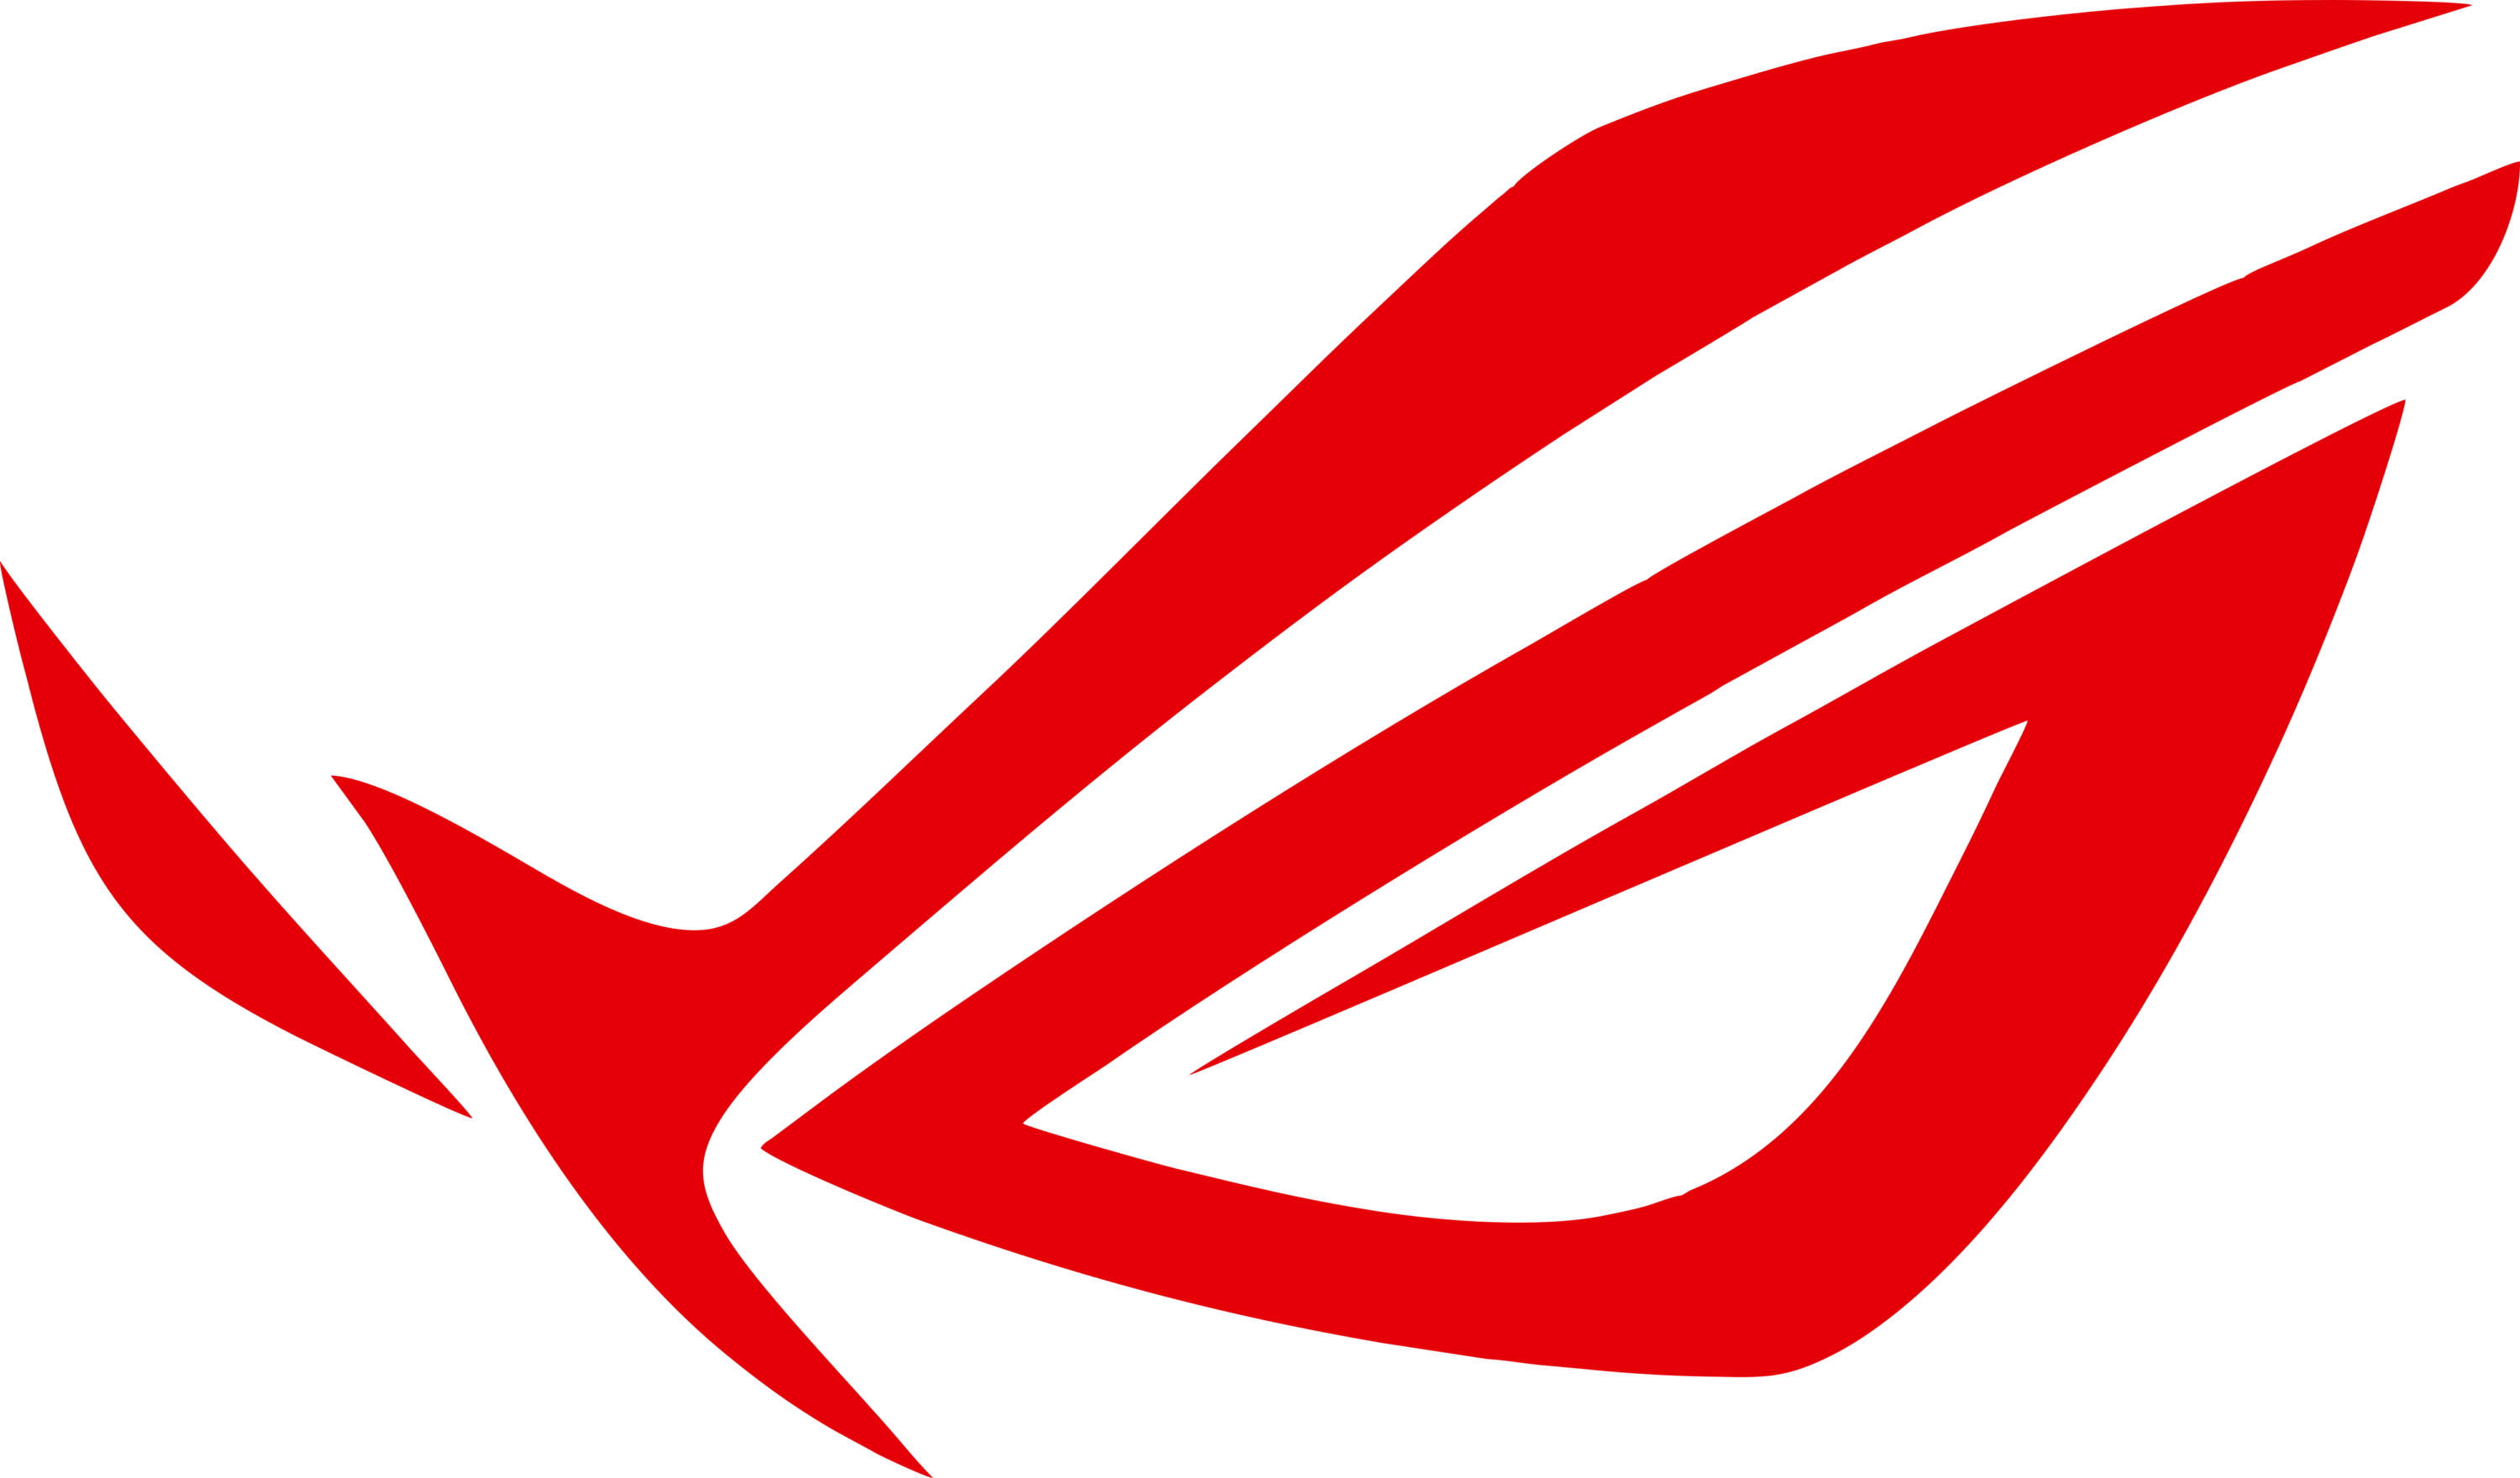 ASUS ROG (Republic of Gamers) Logo red